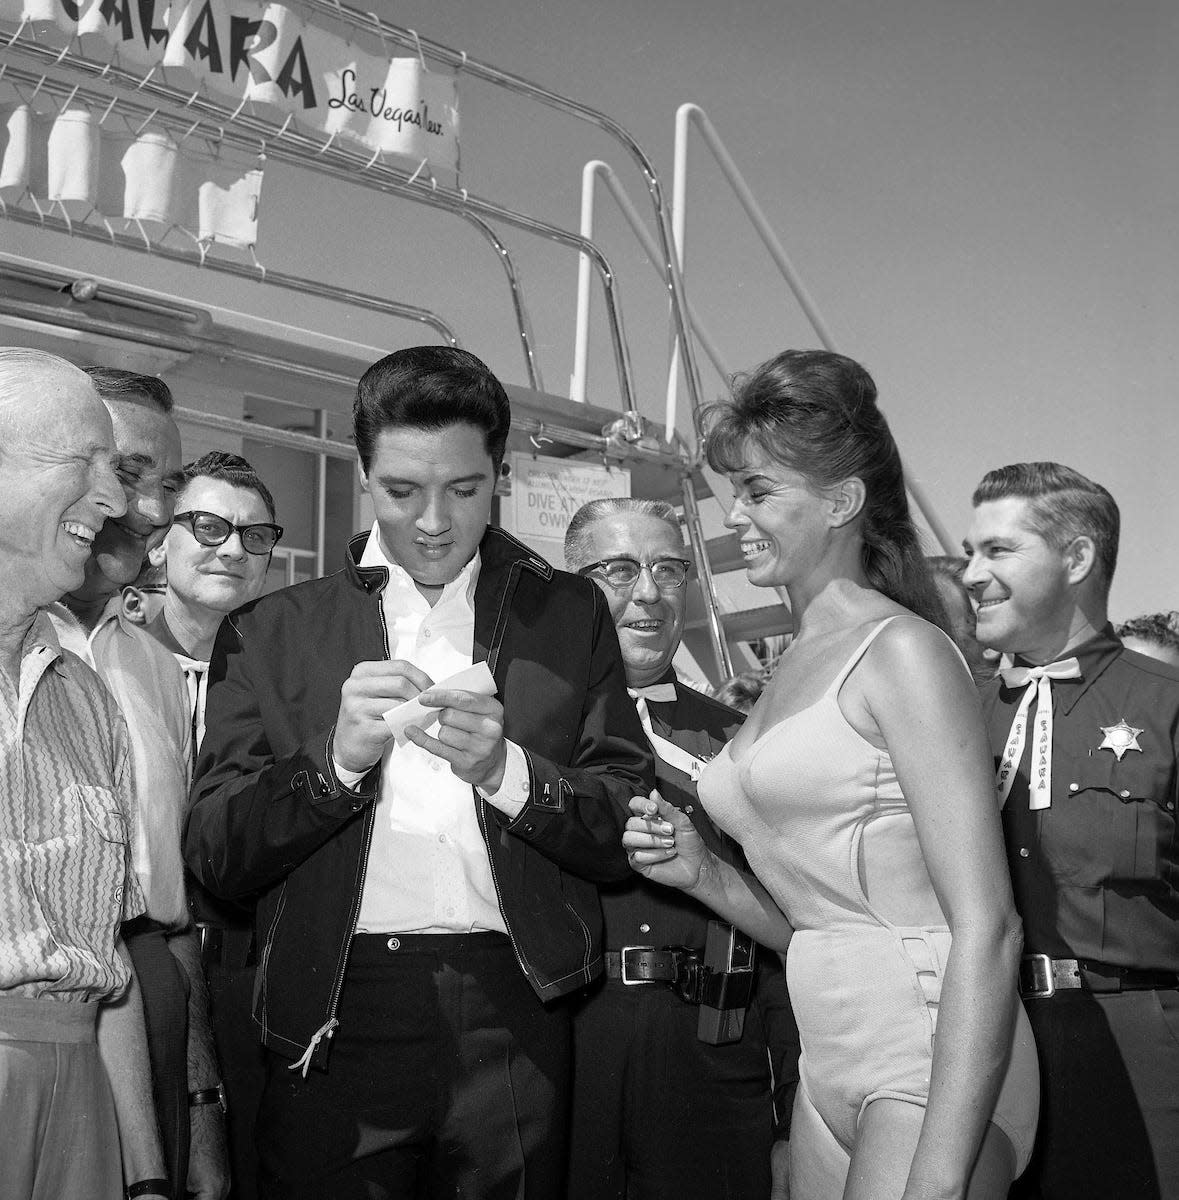 Elvis Presley signs autographs for guests poolside at the Sahara July 26, 1963. (Las Vegas News Bureau Collection, LVCVA Archive)